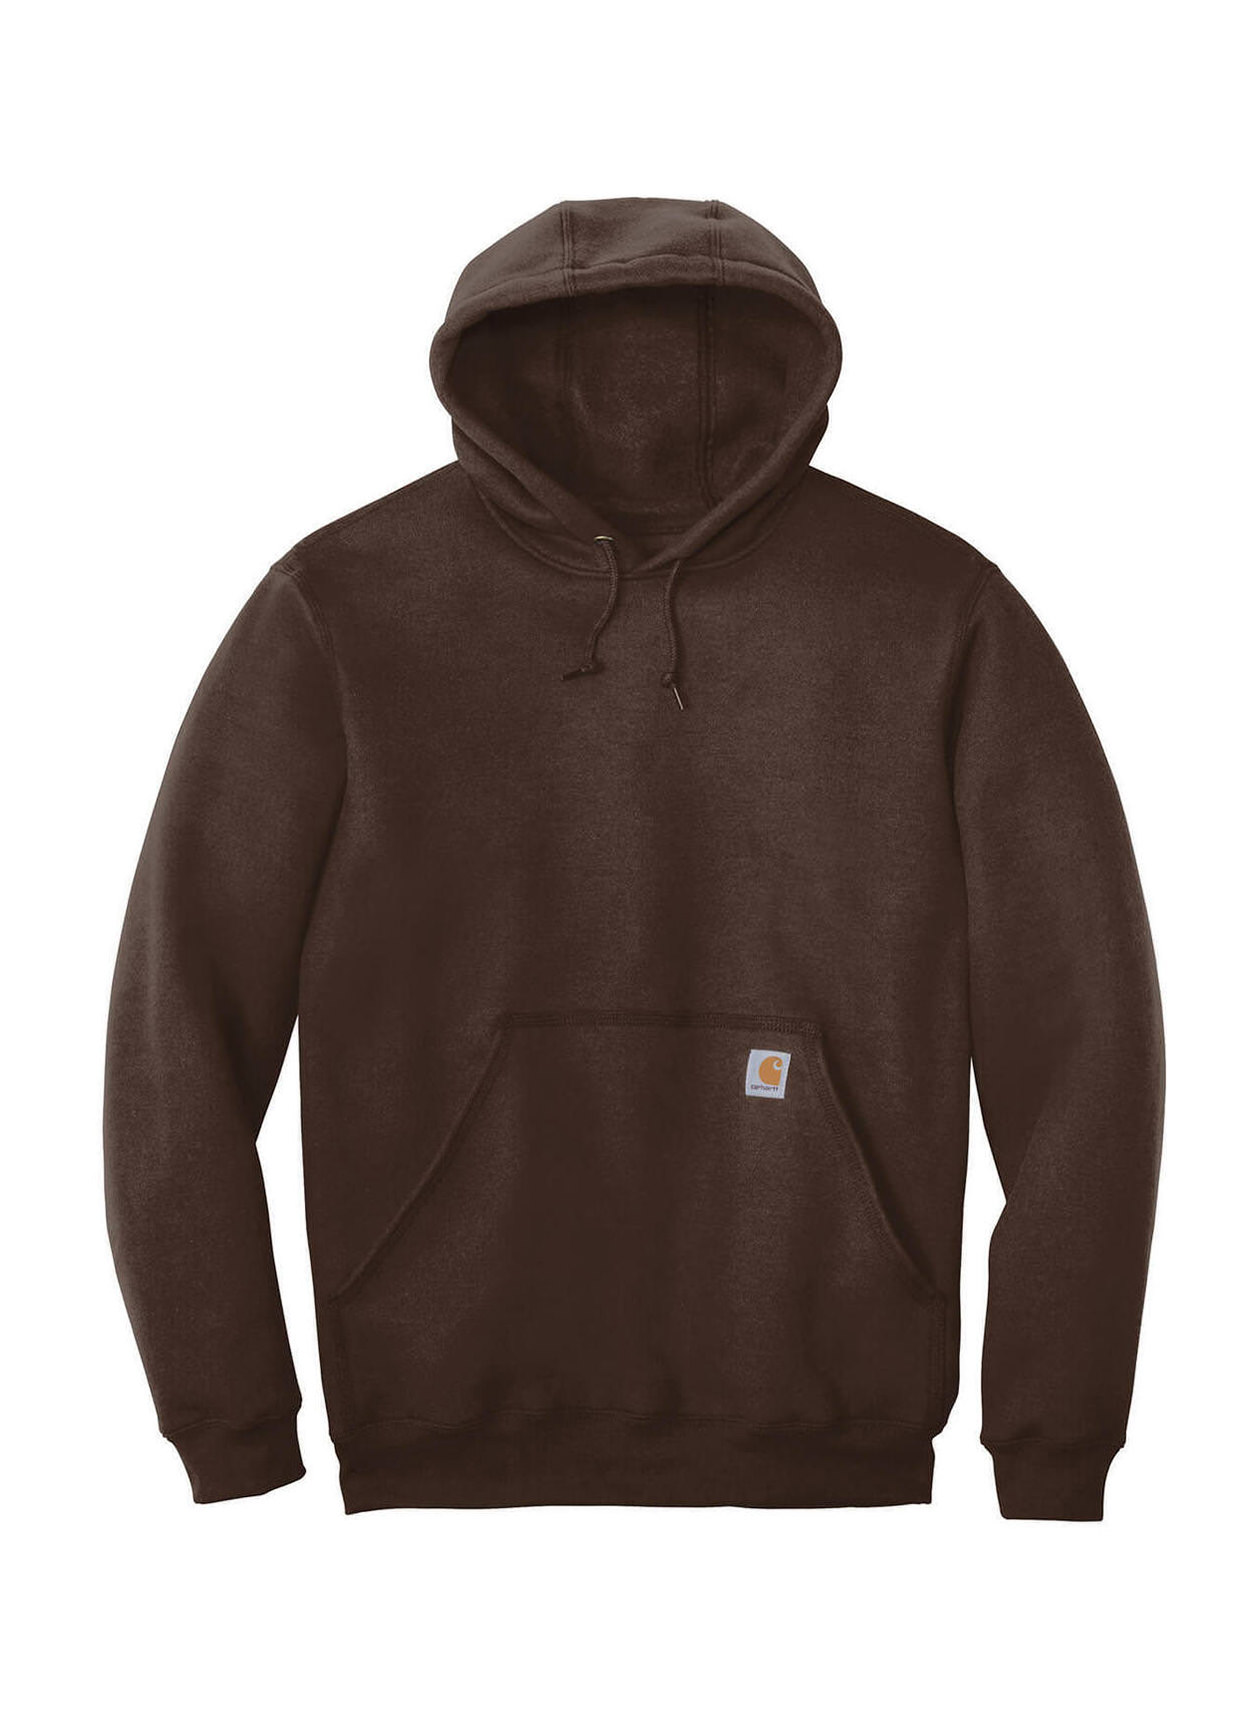 Men's Brown Sweatshirts & Hoodies